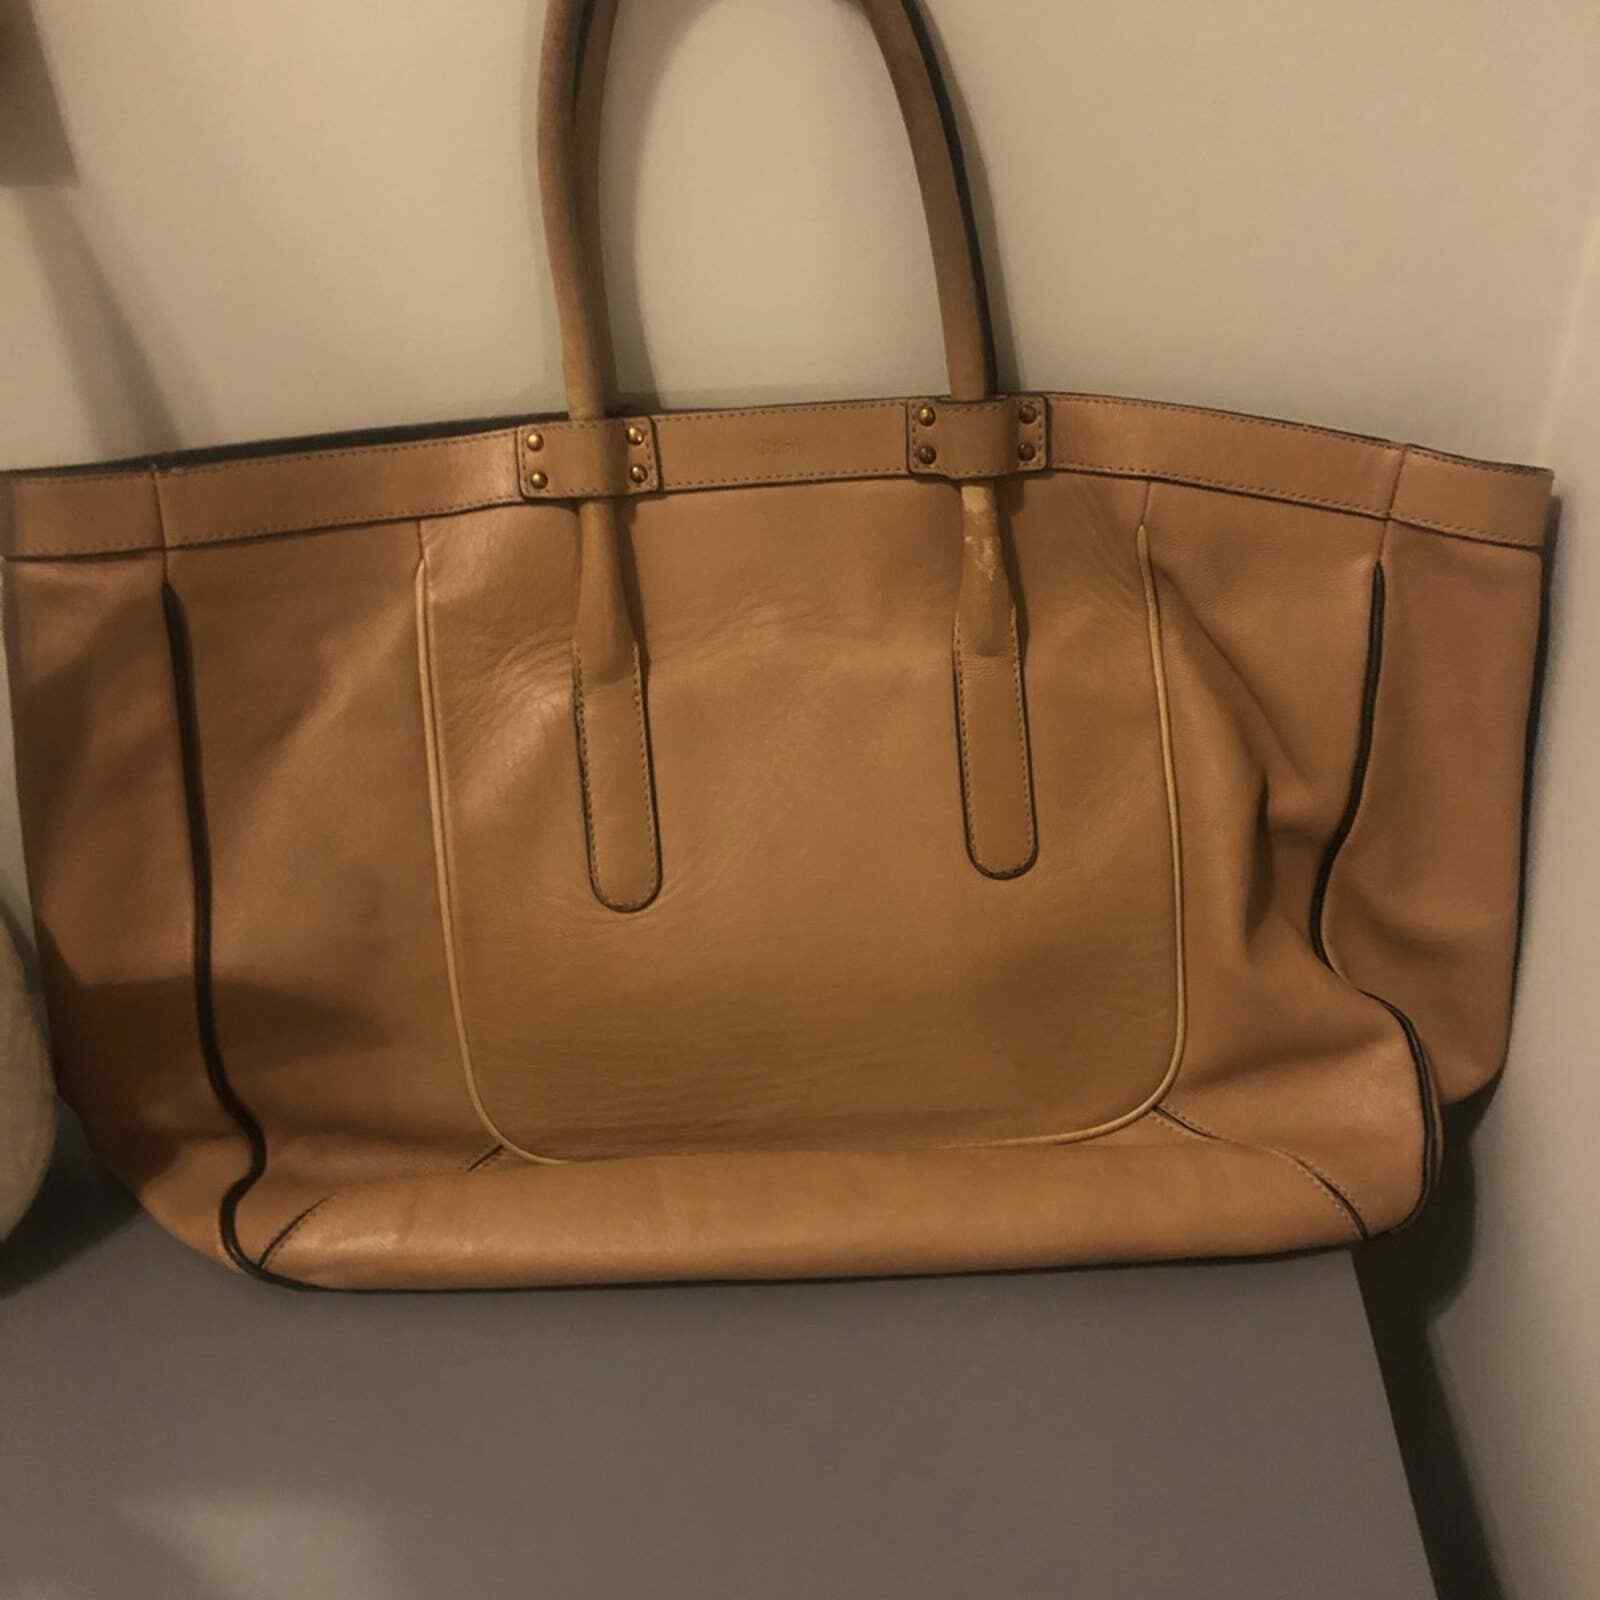 Chloe Large Tan Leather Tote Bag